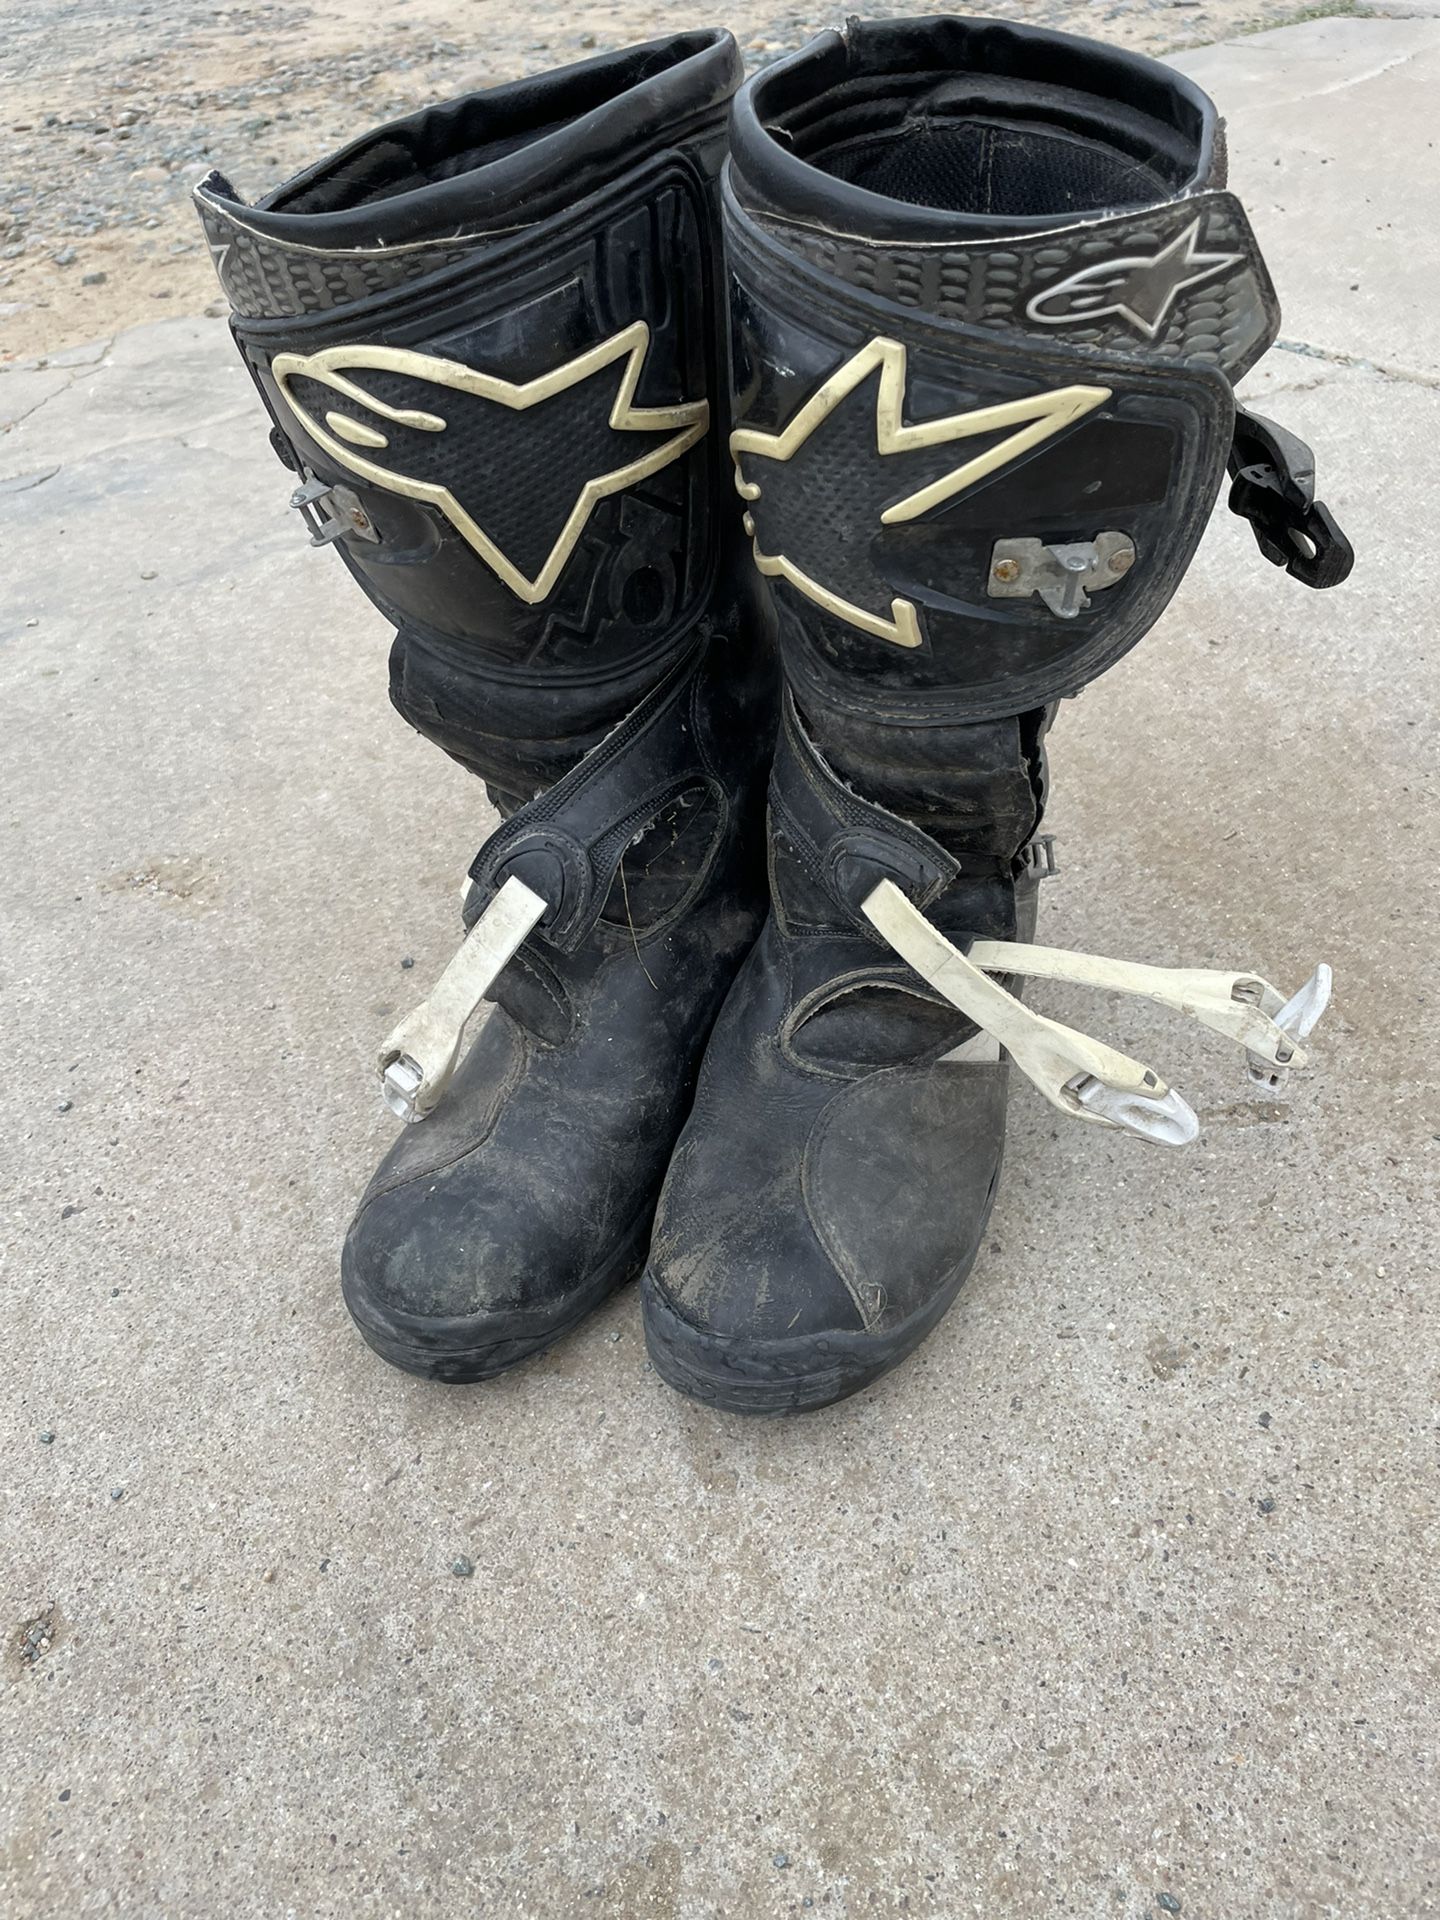 Alpine star boots